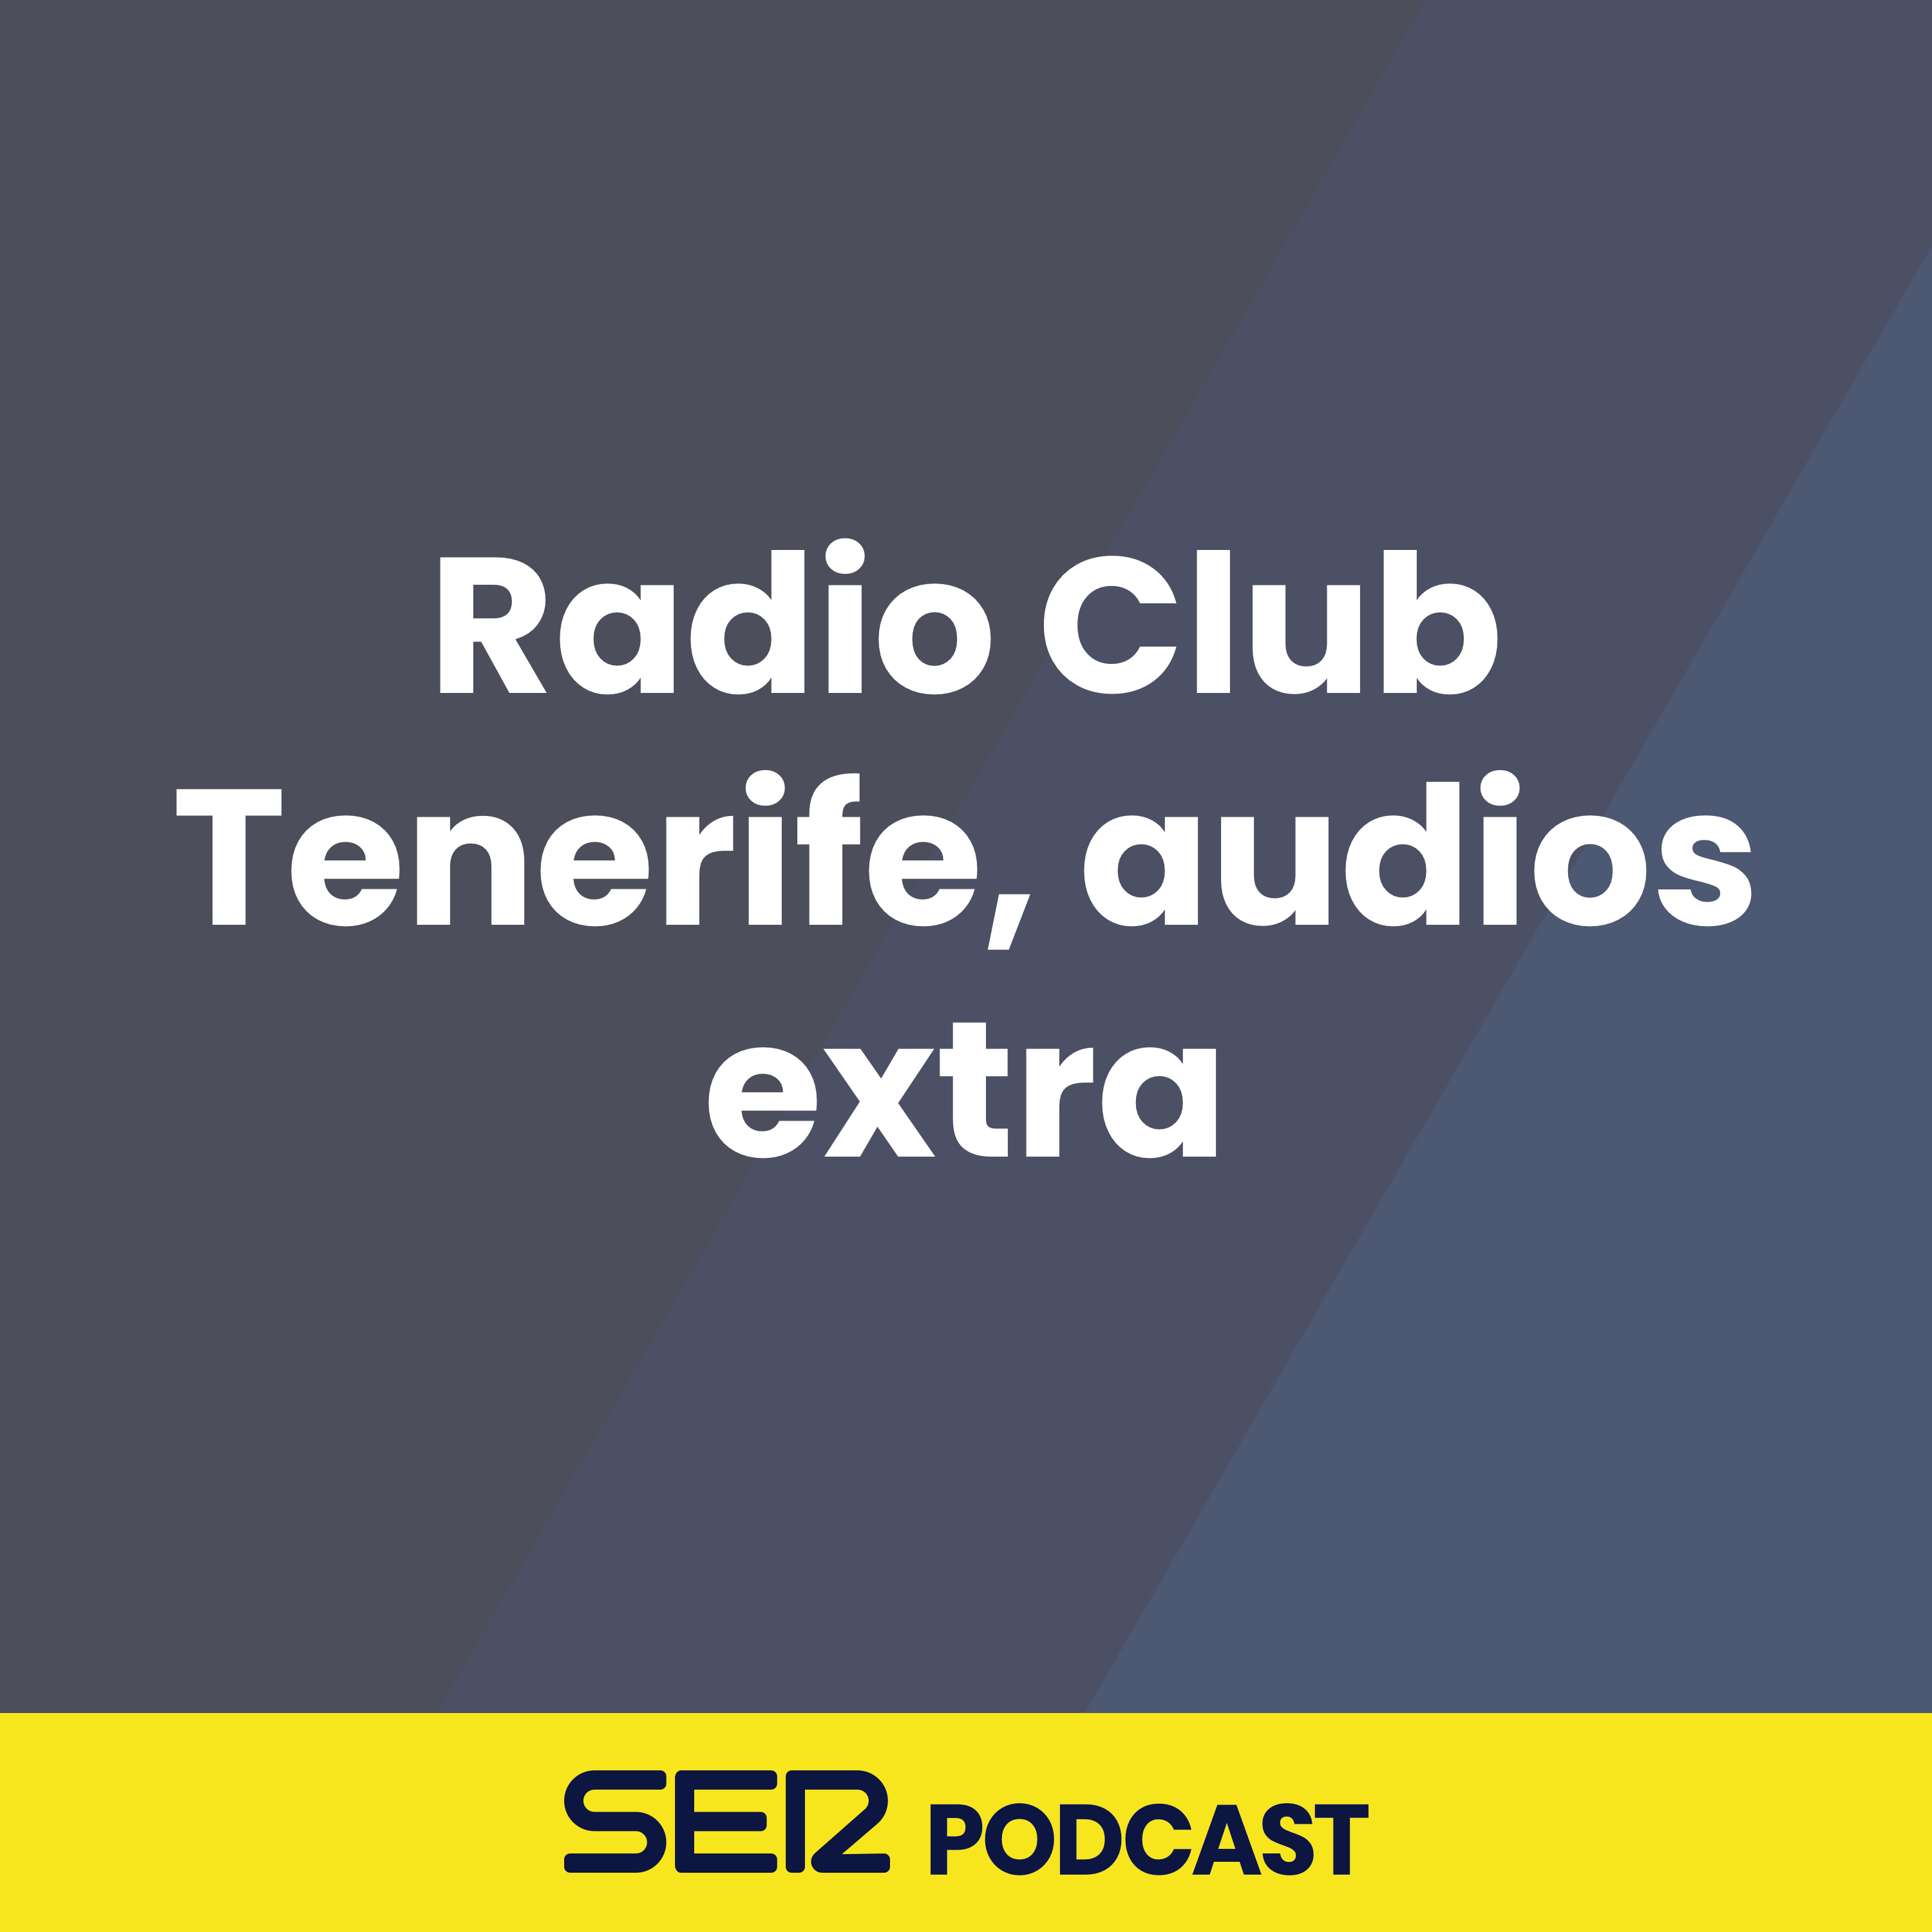 Radio Club Tenerife, audios extra